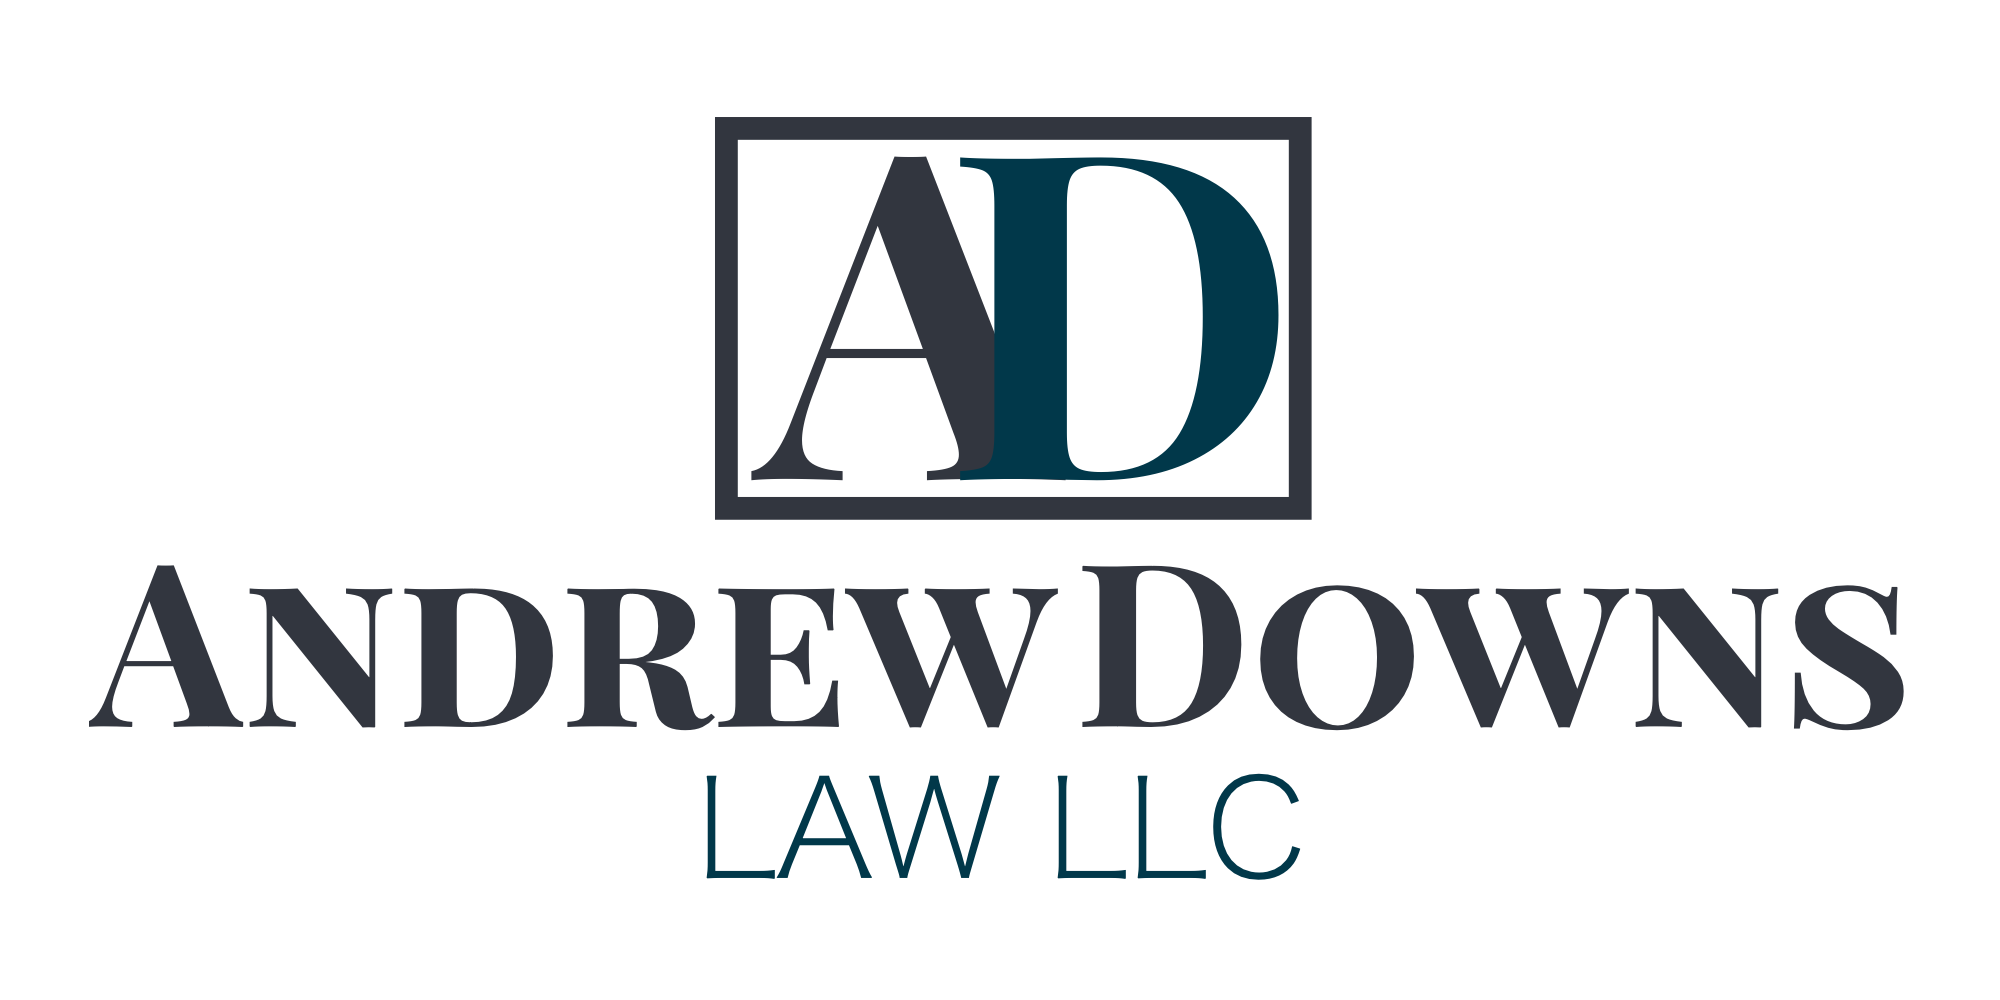 Andrew Downs Law LLC